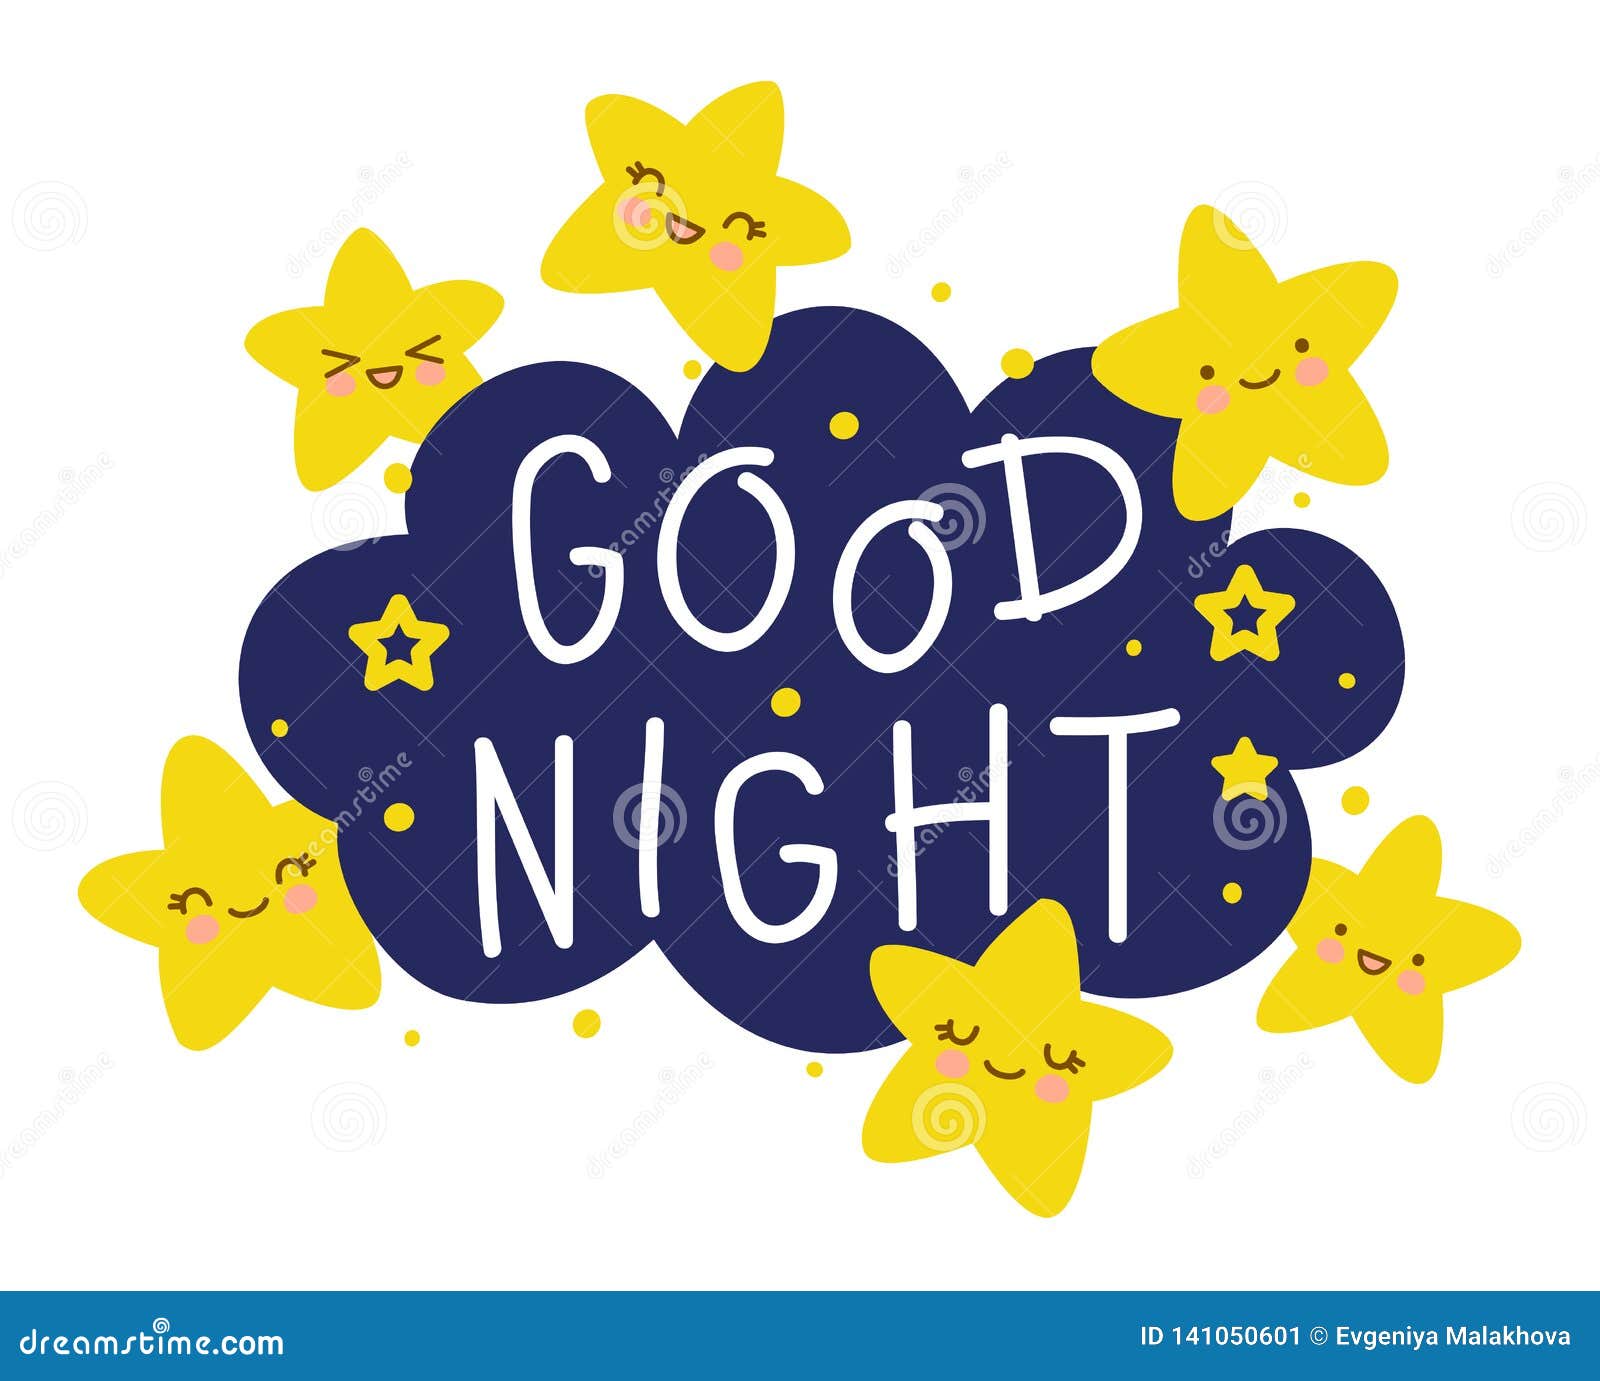 Good Night Smile Stock Illustrations – 1,080 Good Night Smile Stock ...